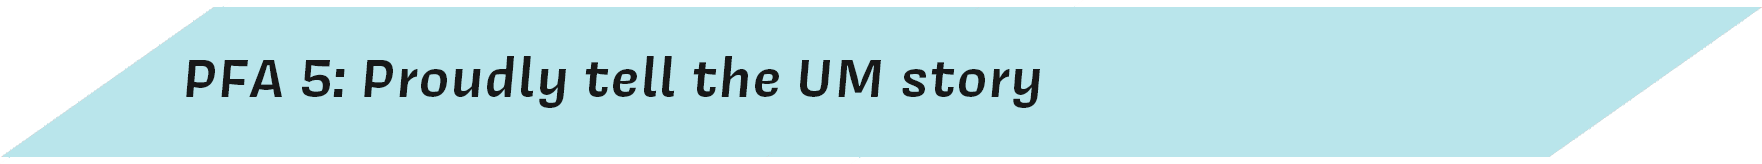 PFA5: Proudly tell the UM story